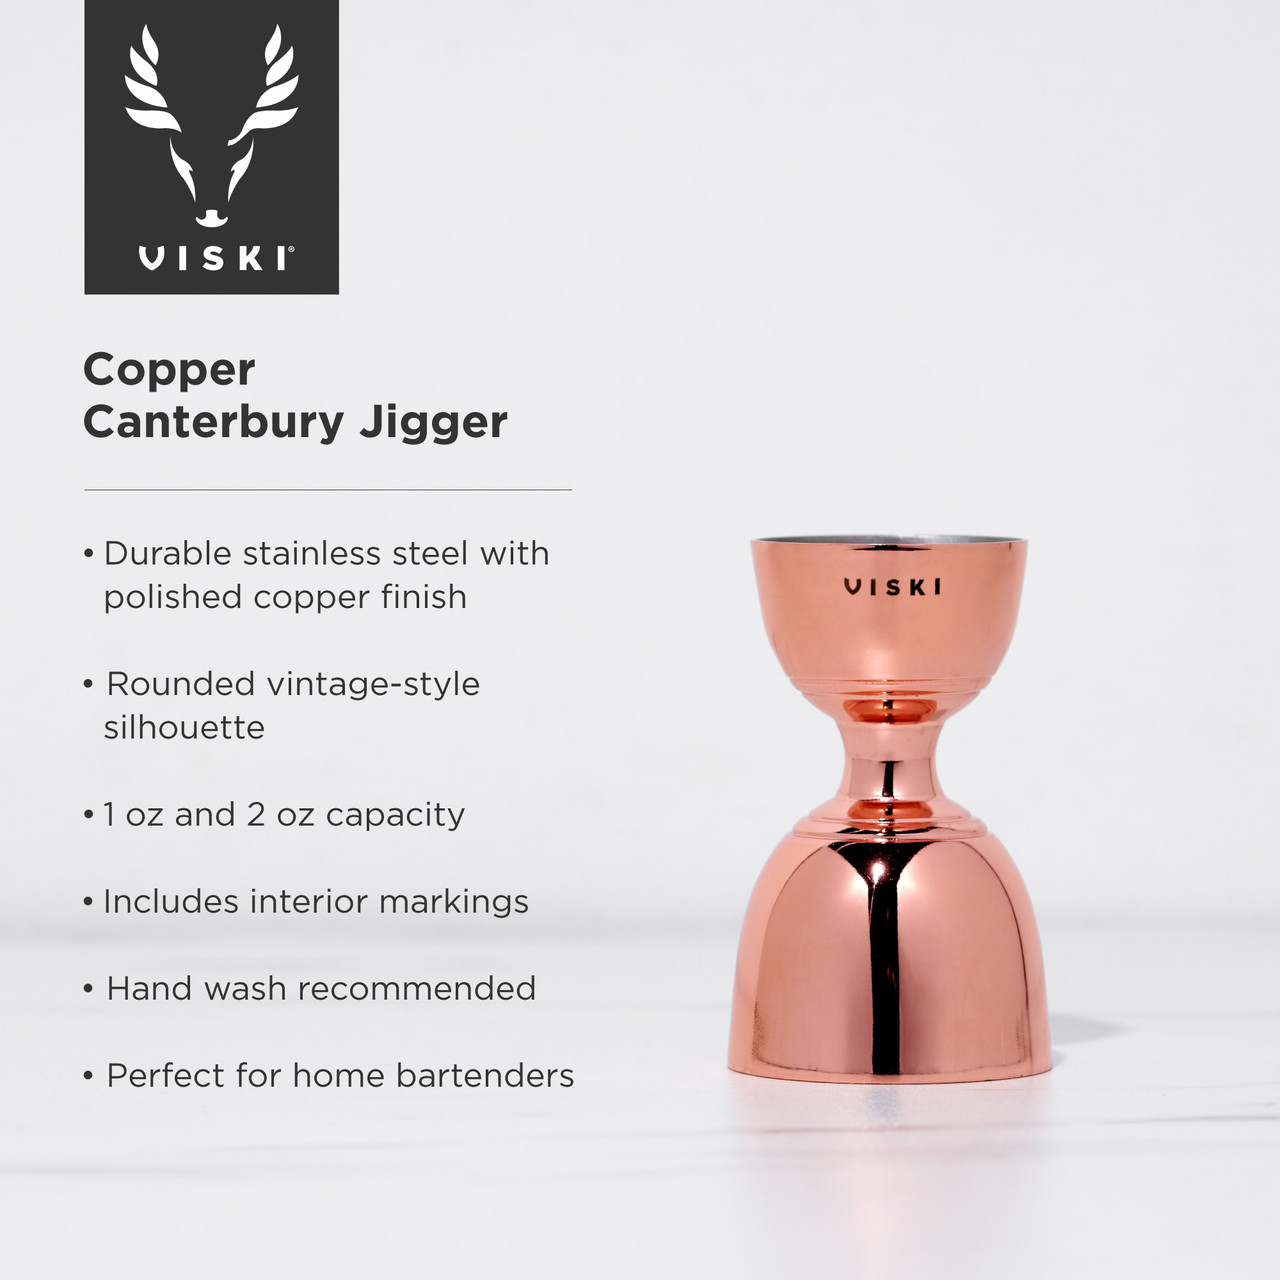 Copper Canterbury Jigger by Viski®